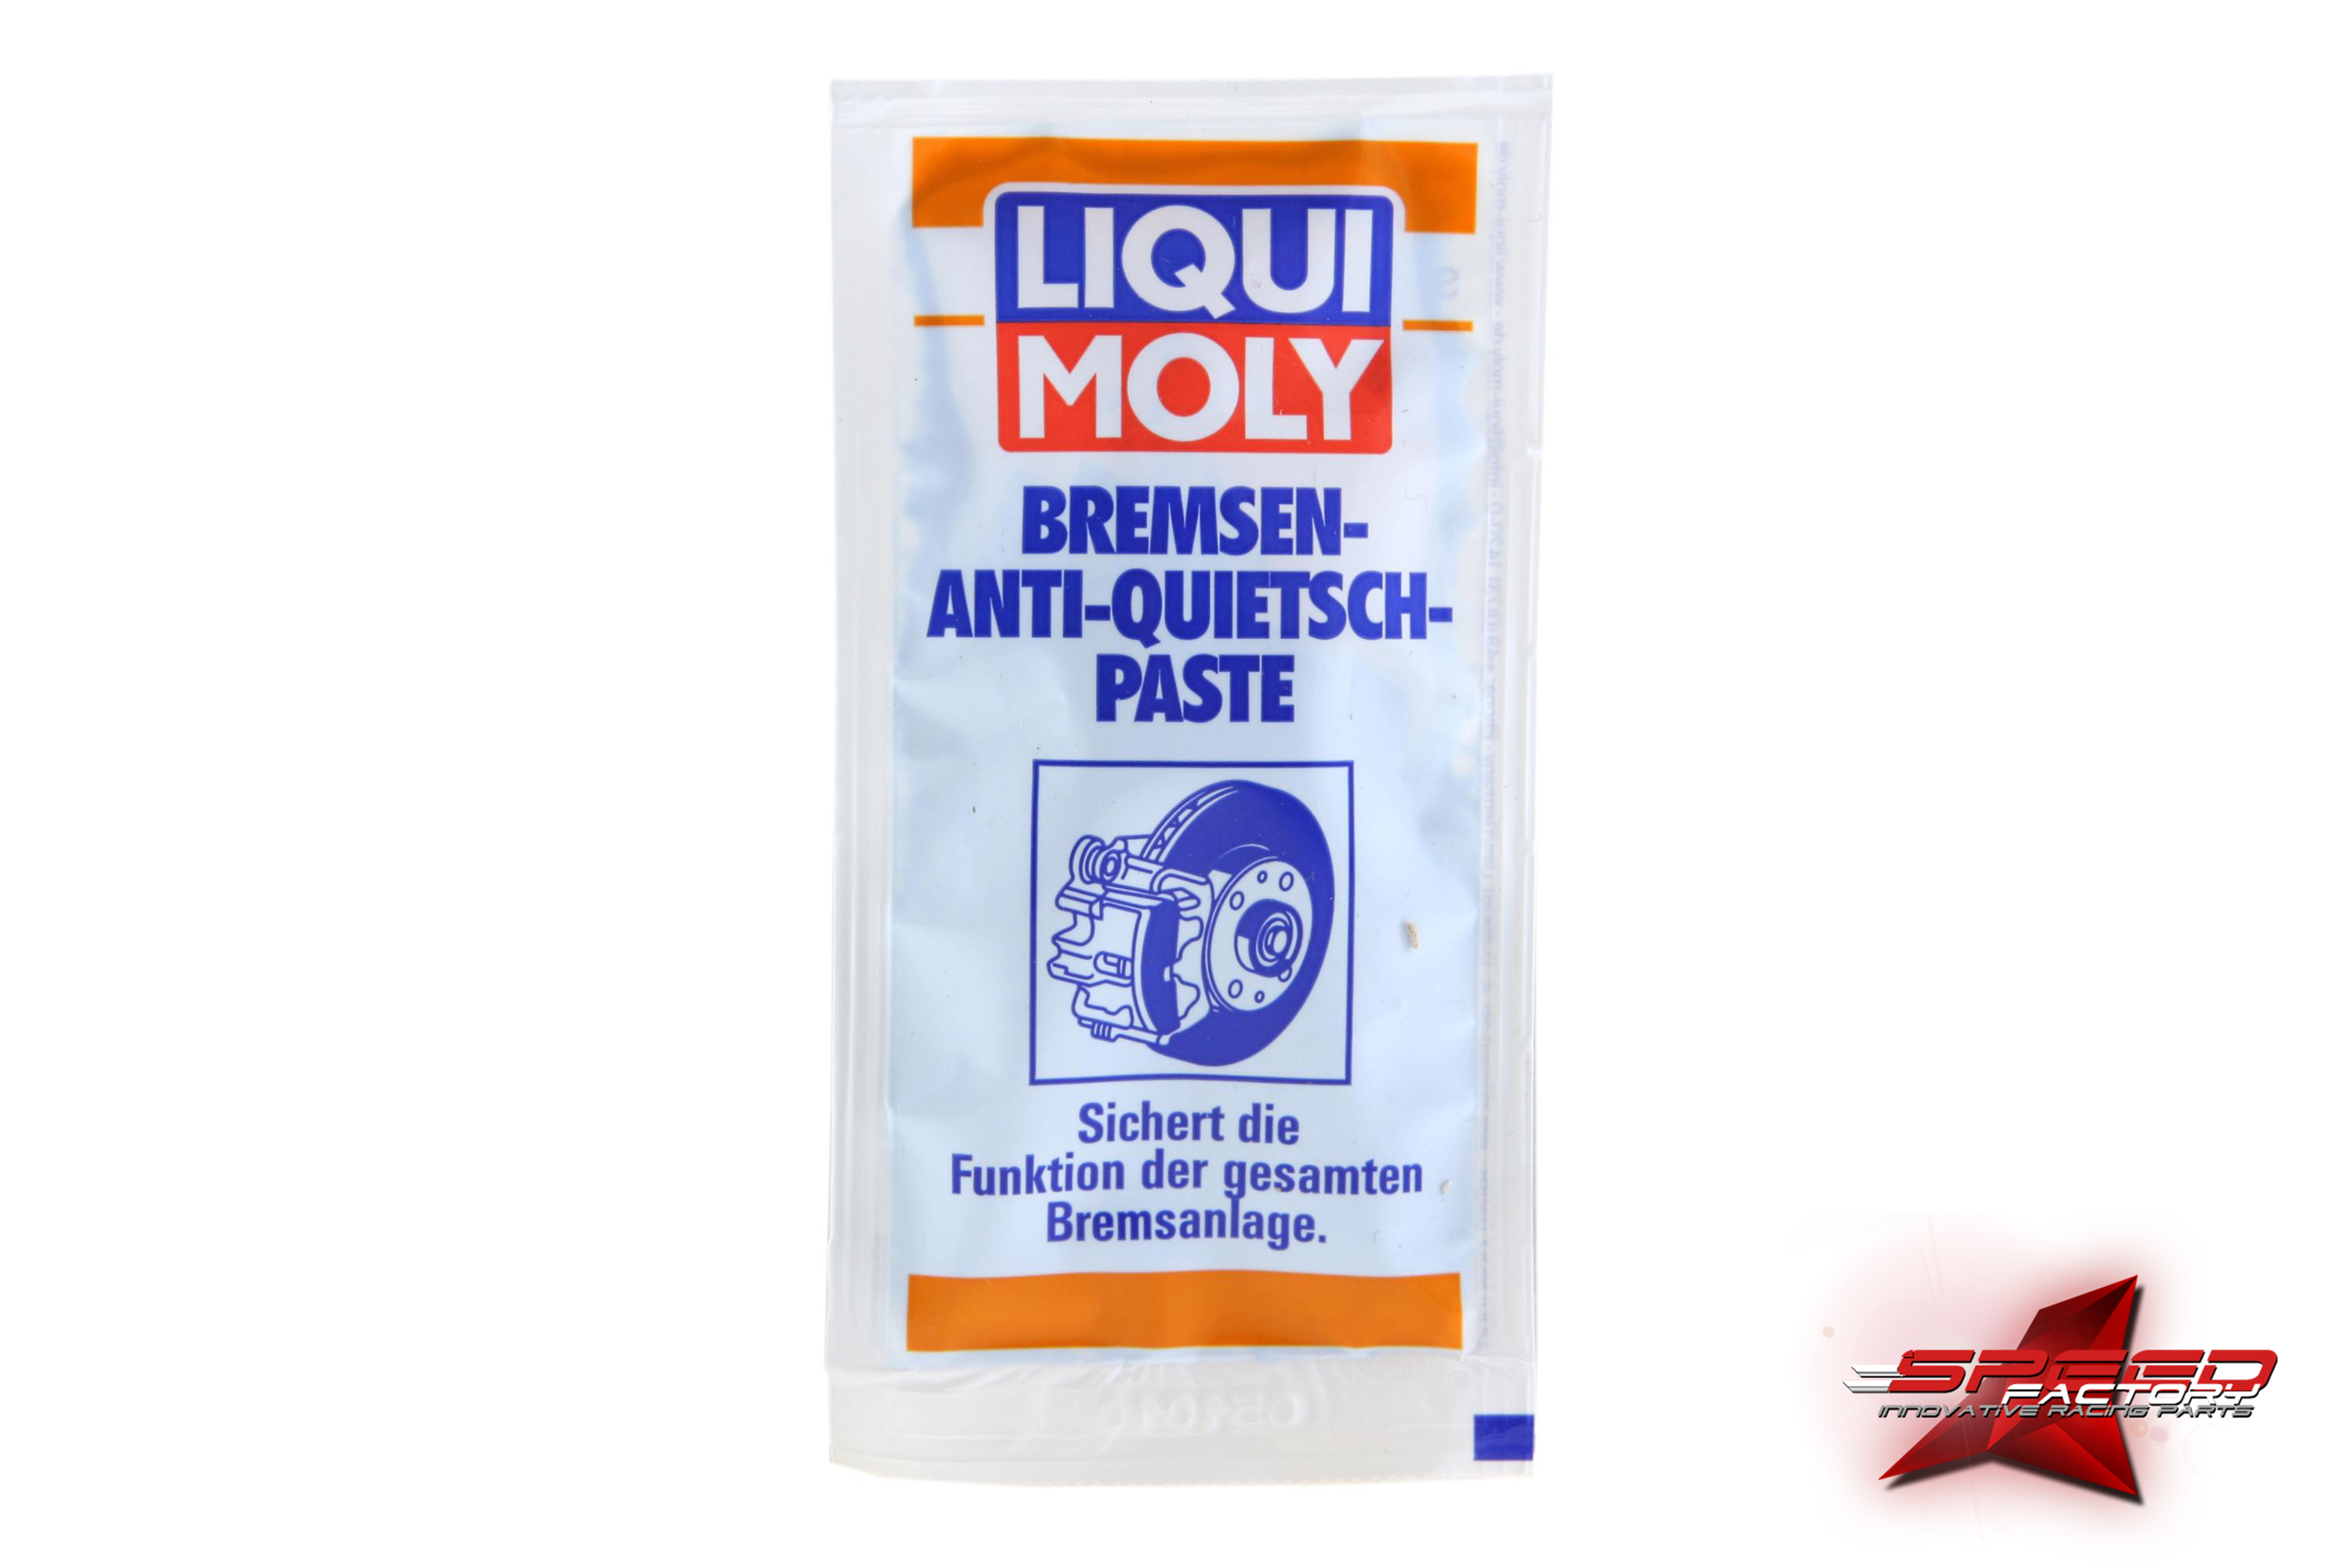 LIQUI MOLY 3078 Bremsen-Anti-Quietsch-Paste 10g - Nur 6,78€